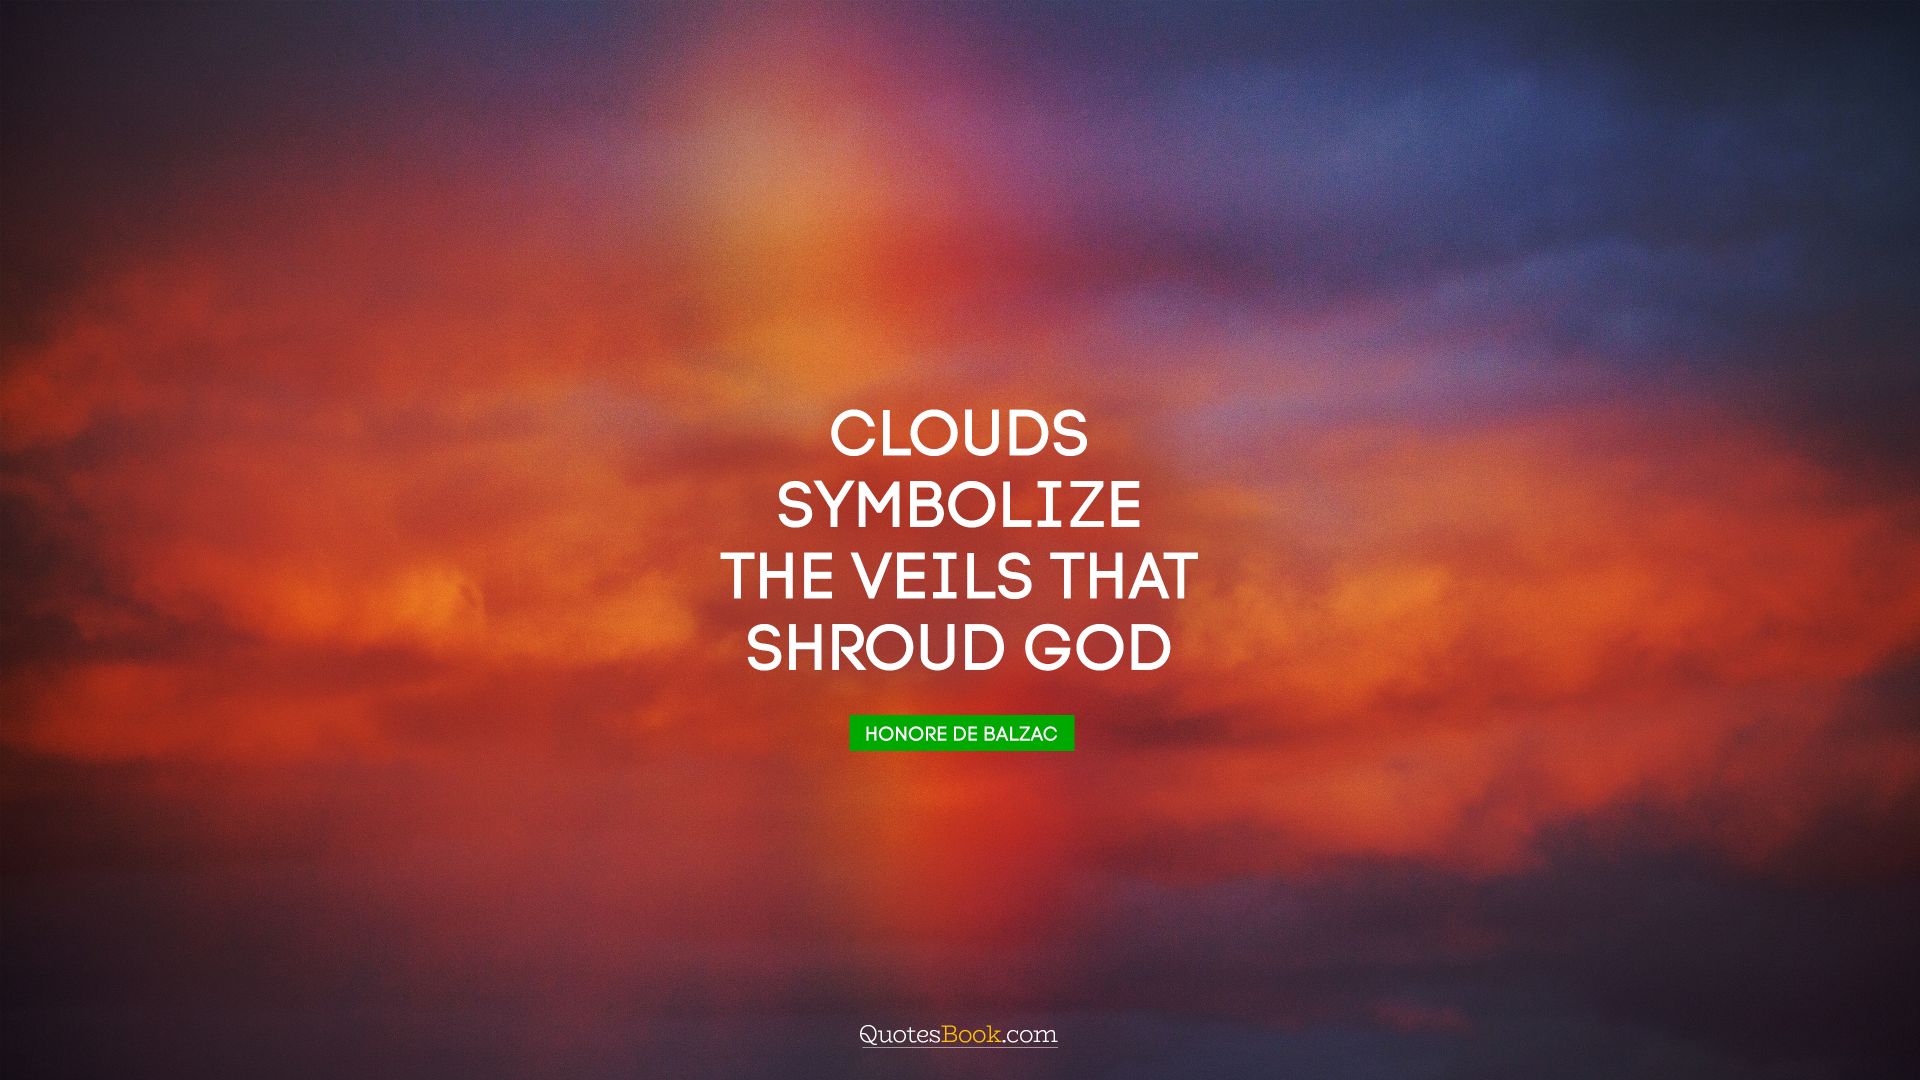 Clouds symbolize the veils that shroud God. - Quote by Honore de Balzac